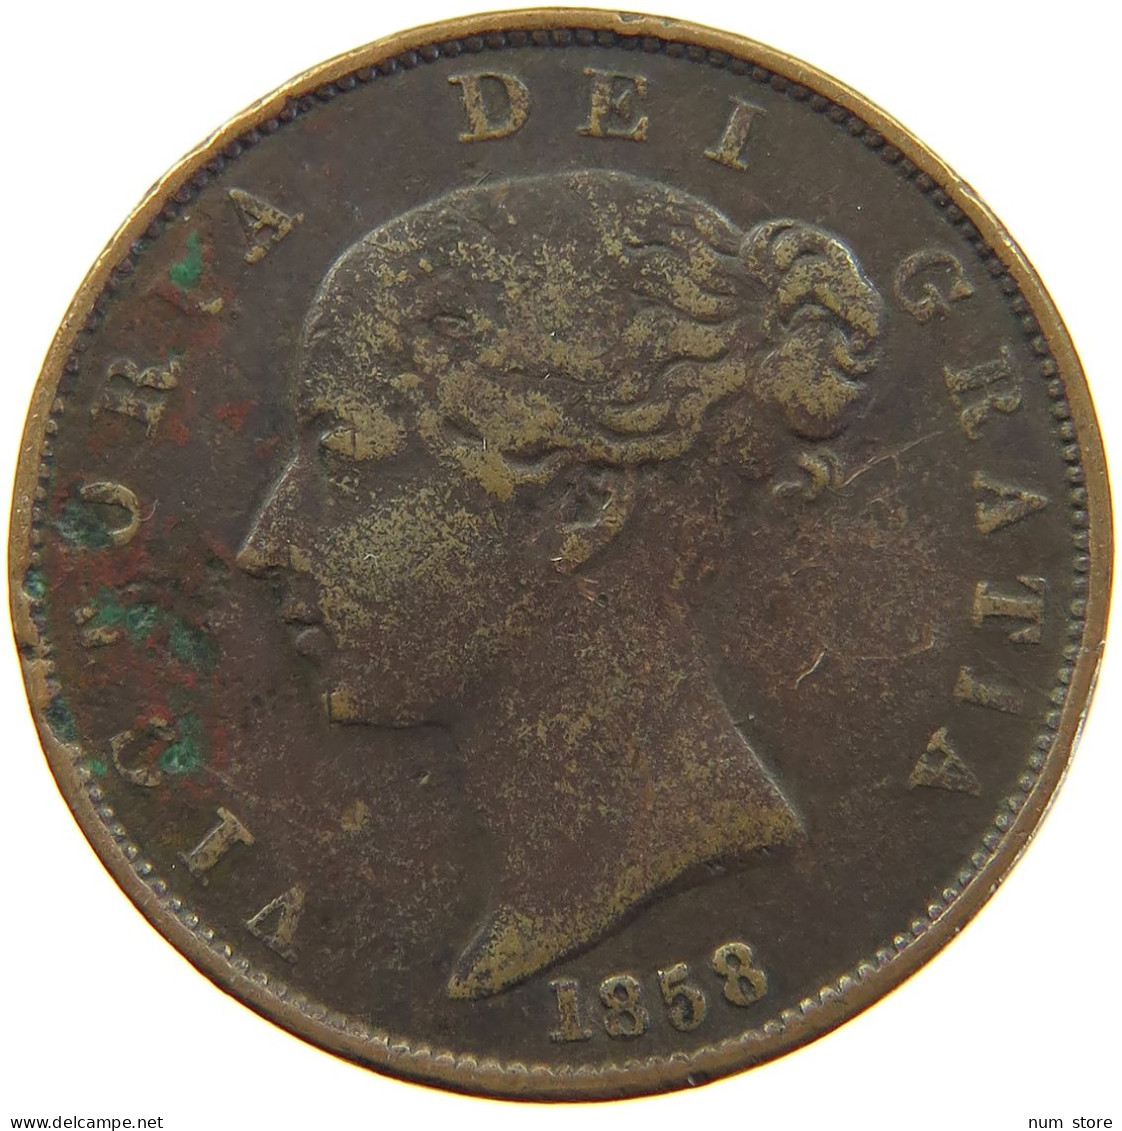 GREAT BRITAIN HALFPENNY 1858 Victoria 1837-1901 #s010 0271 - C. 1/2 Penny